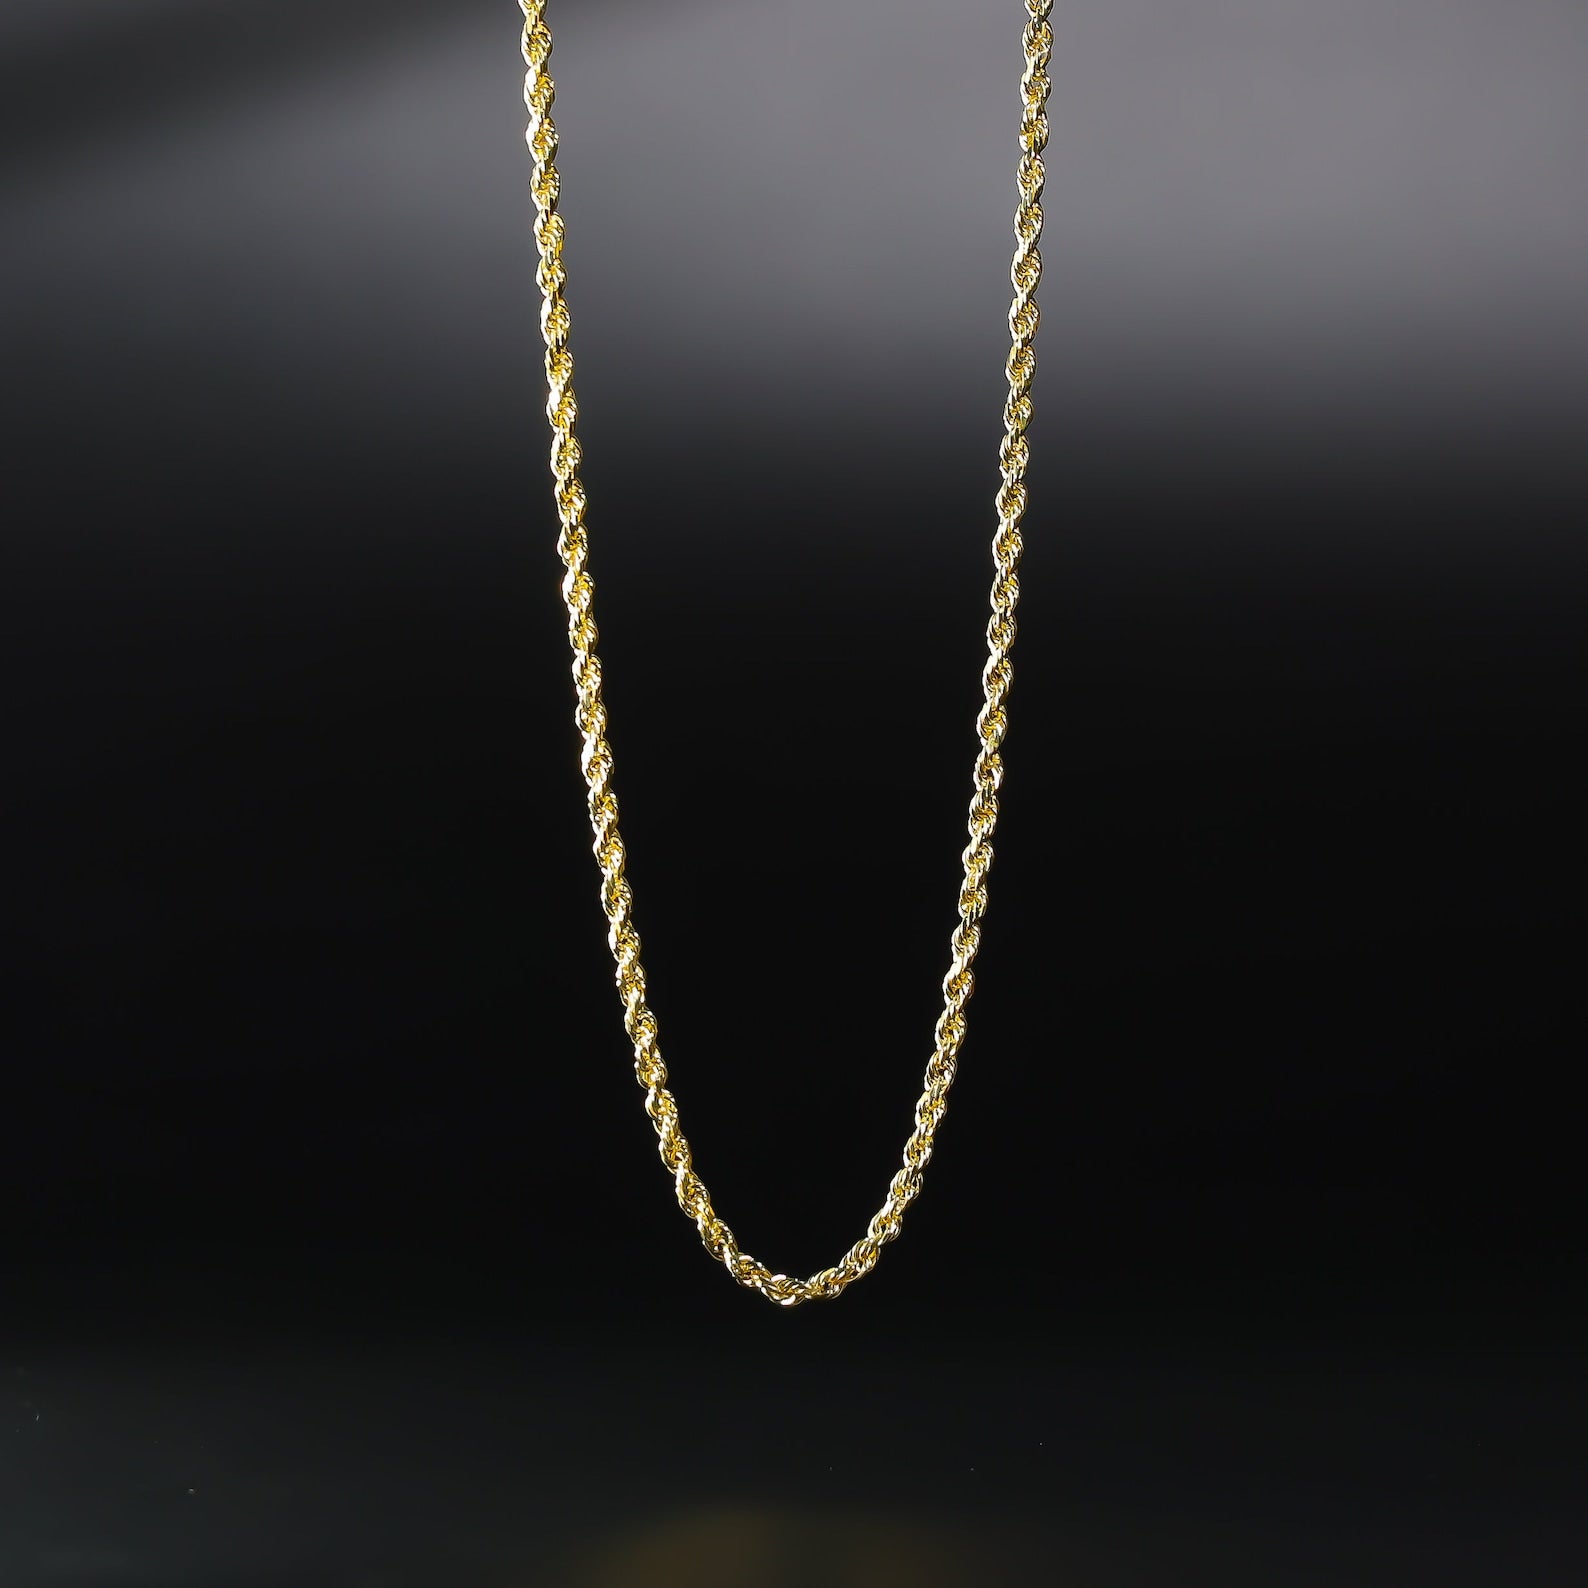 Gold Calendario Azteca Pendant Model-1565 - Charlie & Co. Jewelry